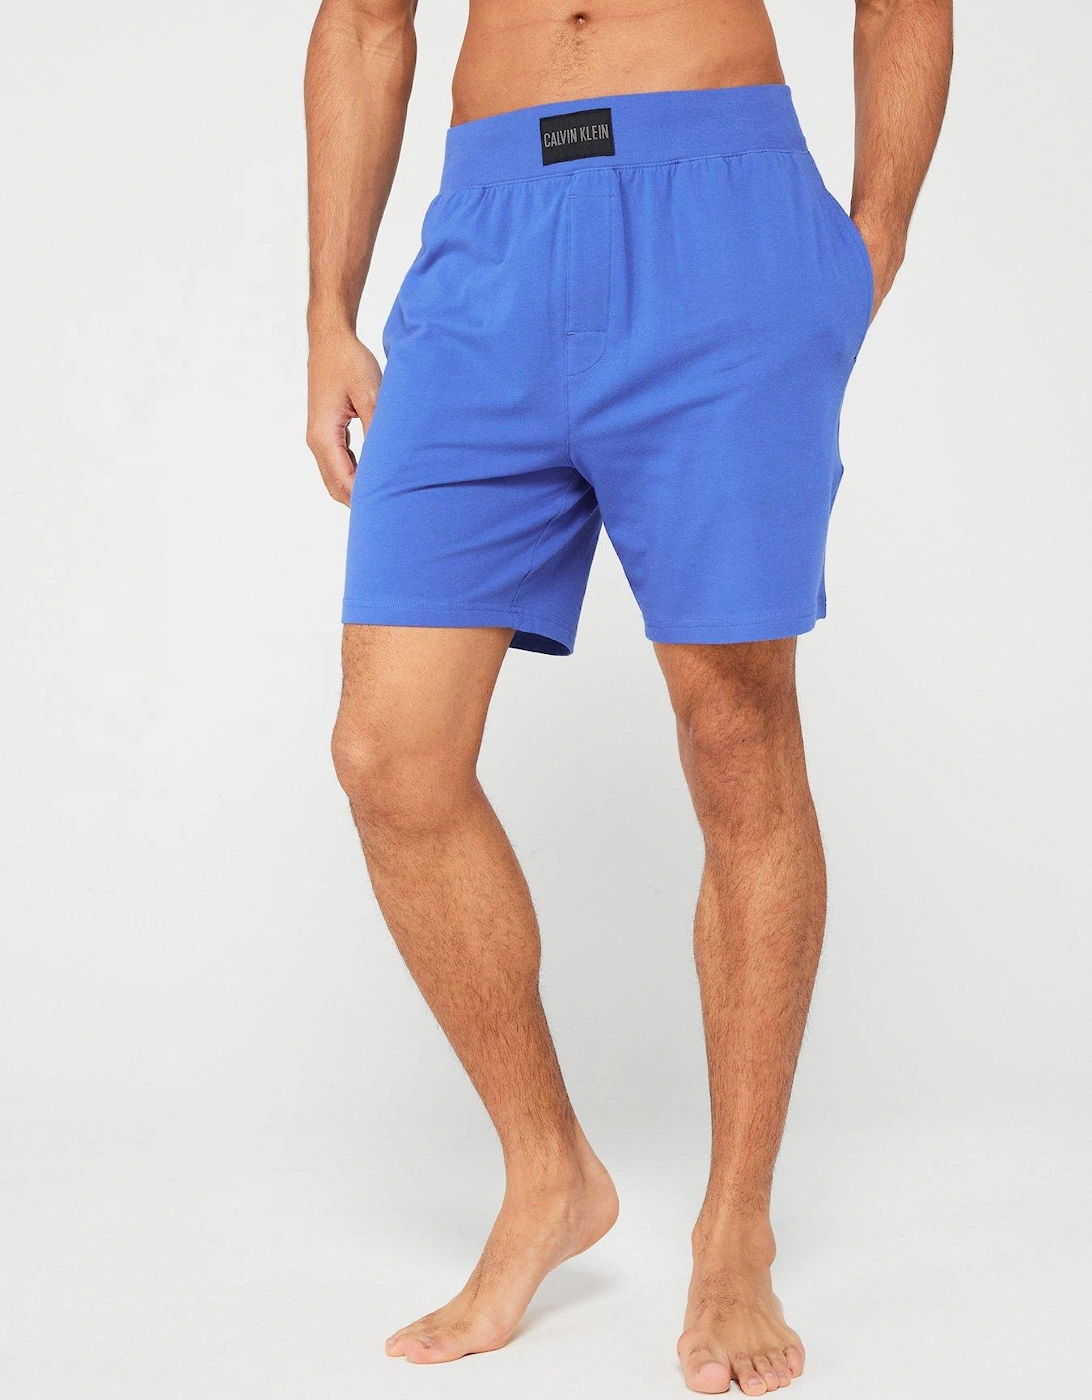 Loungewear Sleep Shorts - Bright Blue